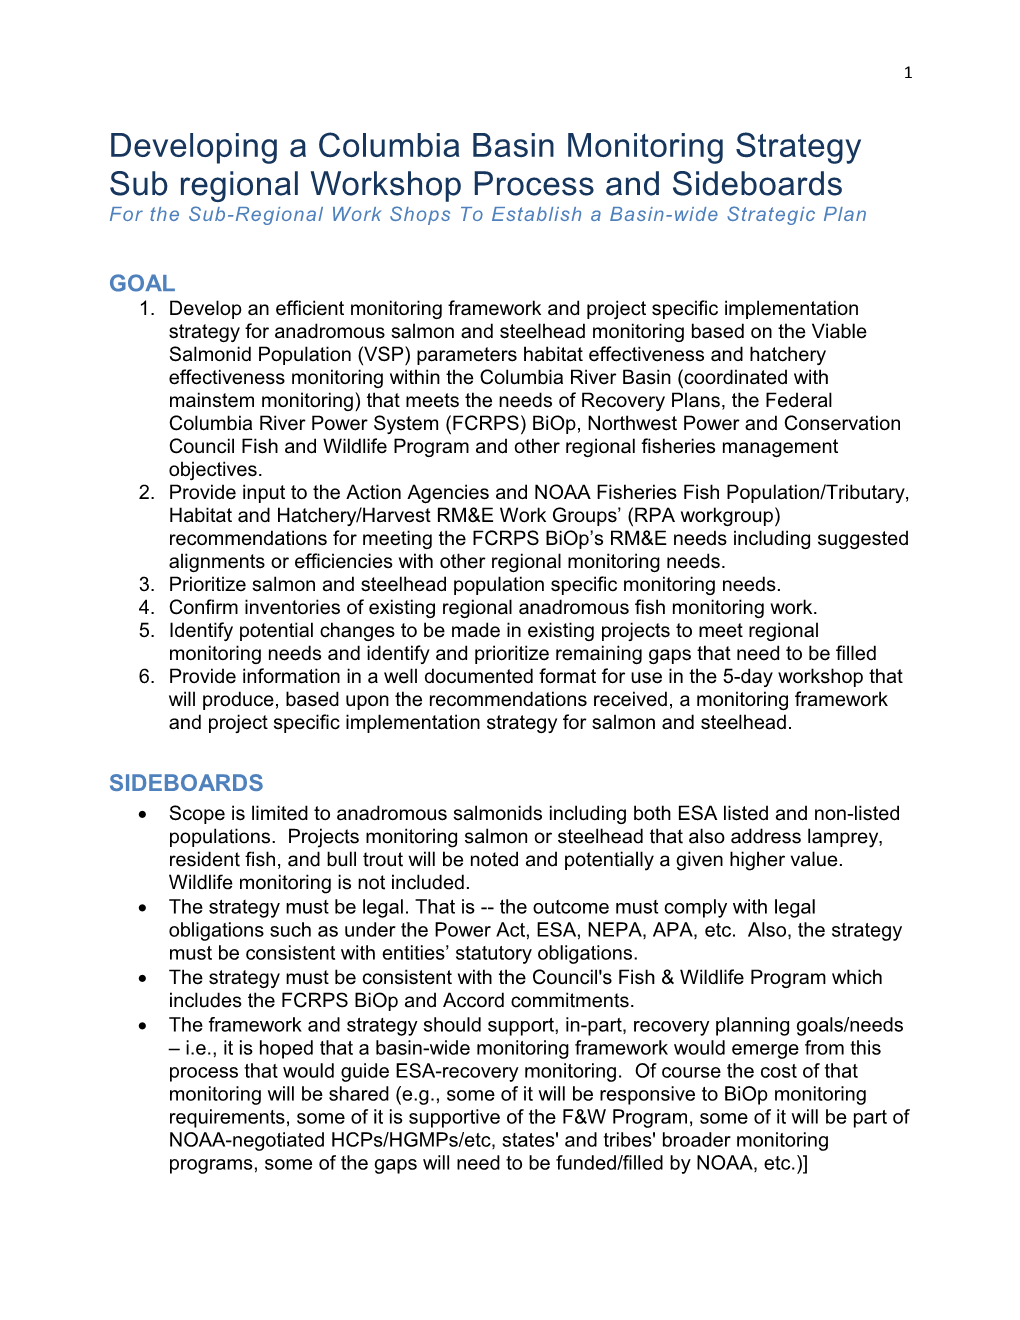 CBFWA Management Decision Framework and Sideboards